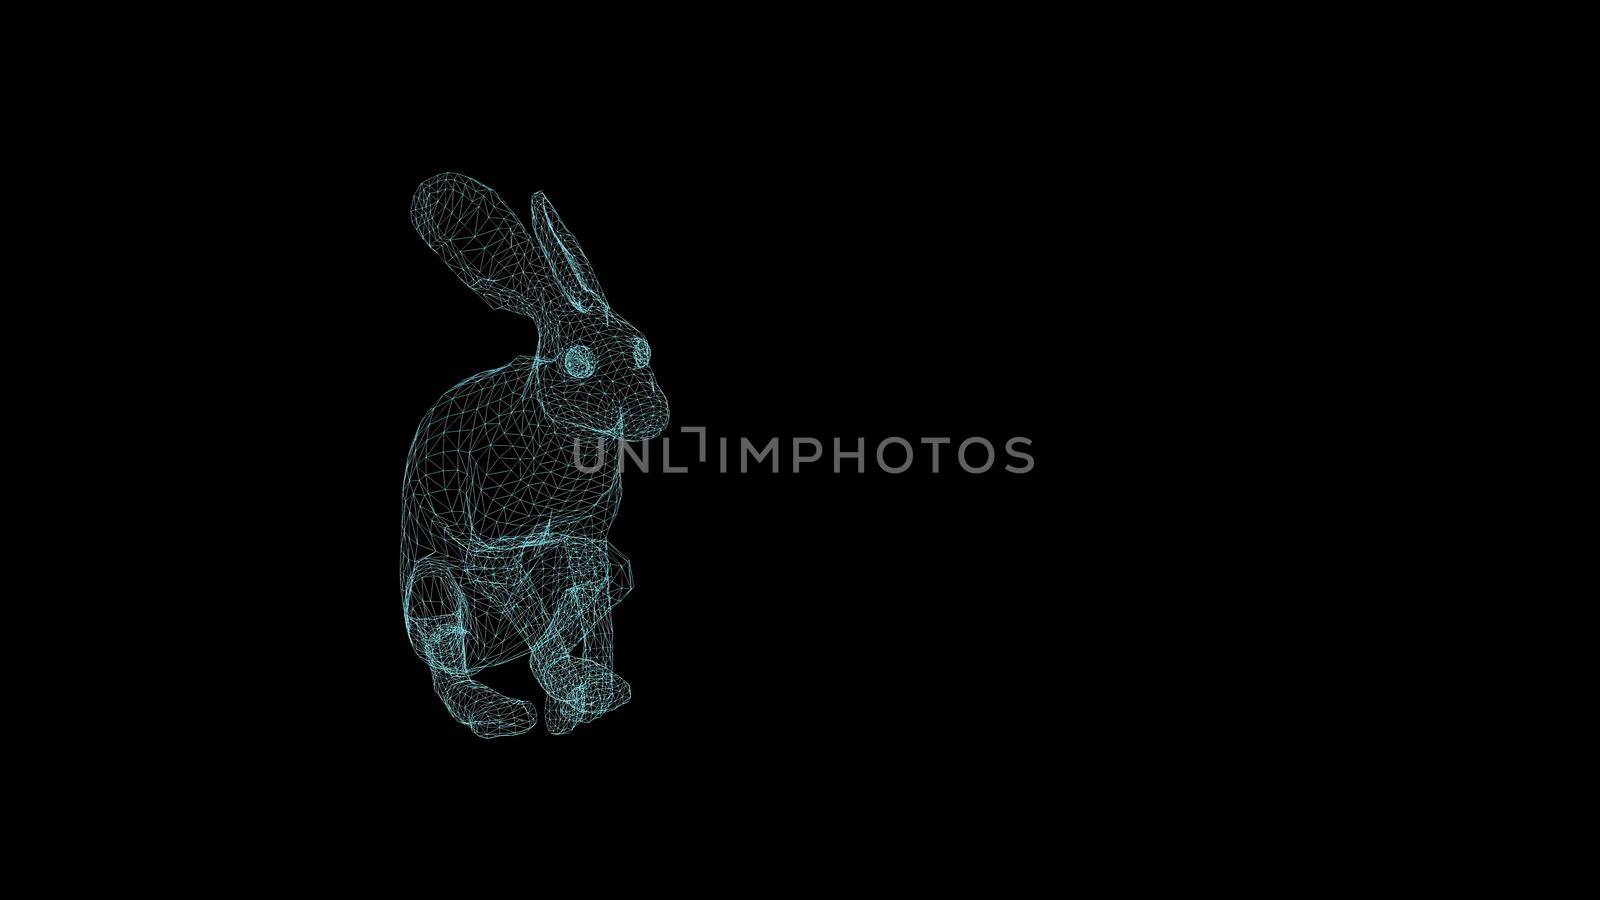 wire frame 3d illustration of rabbit running on black background